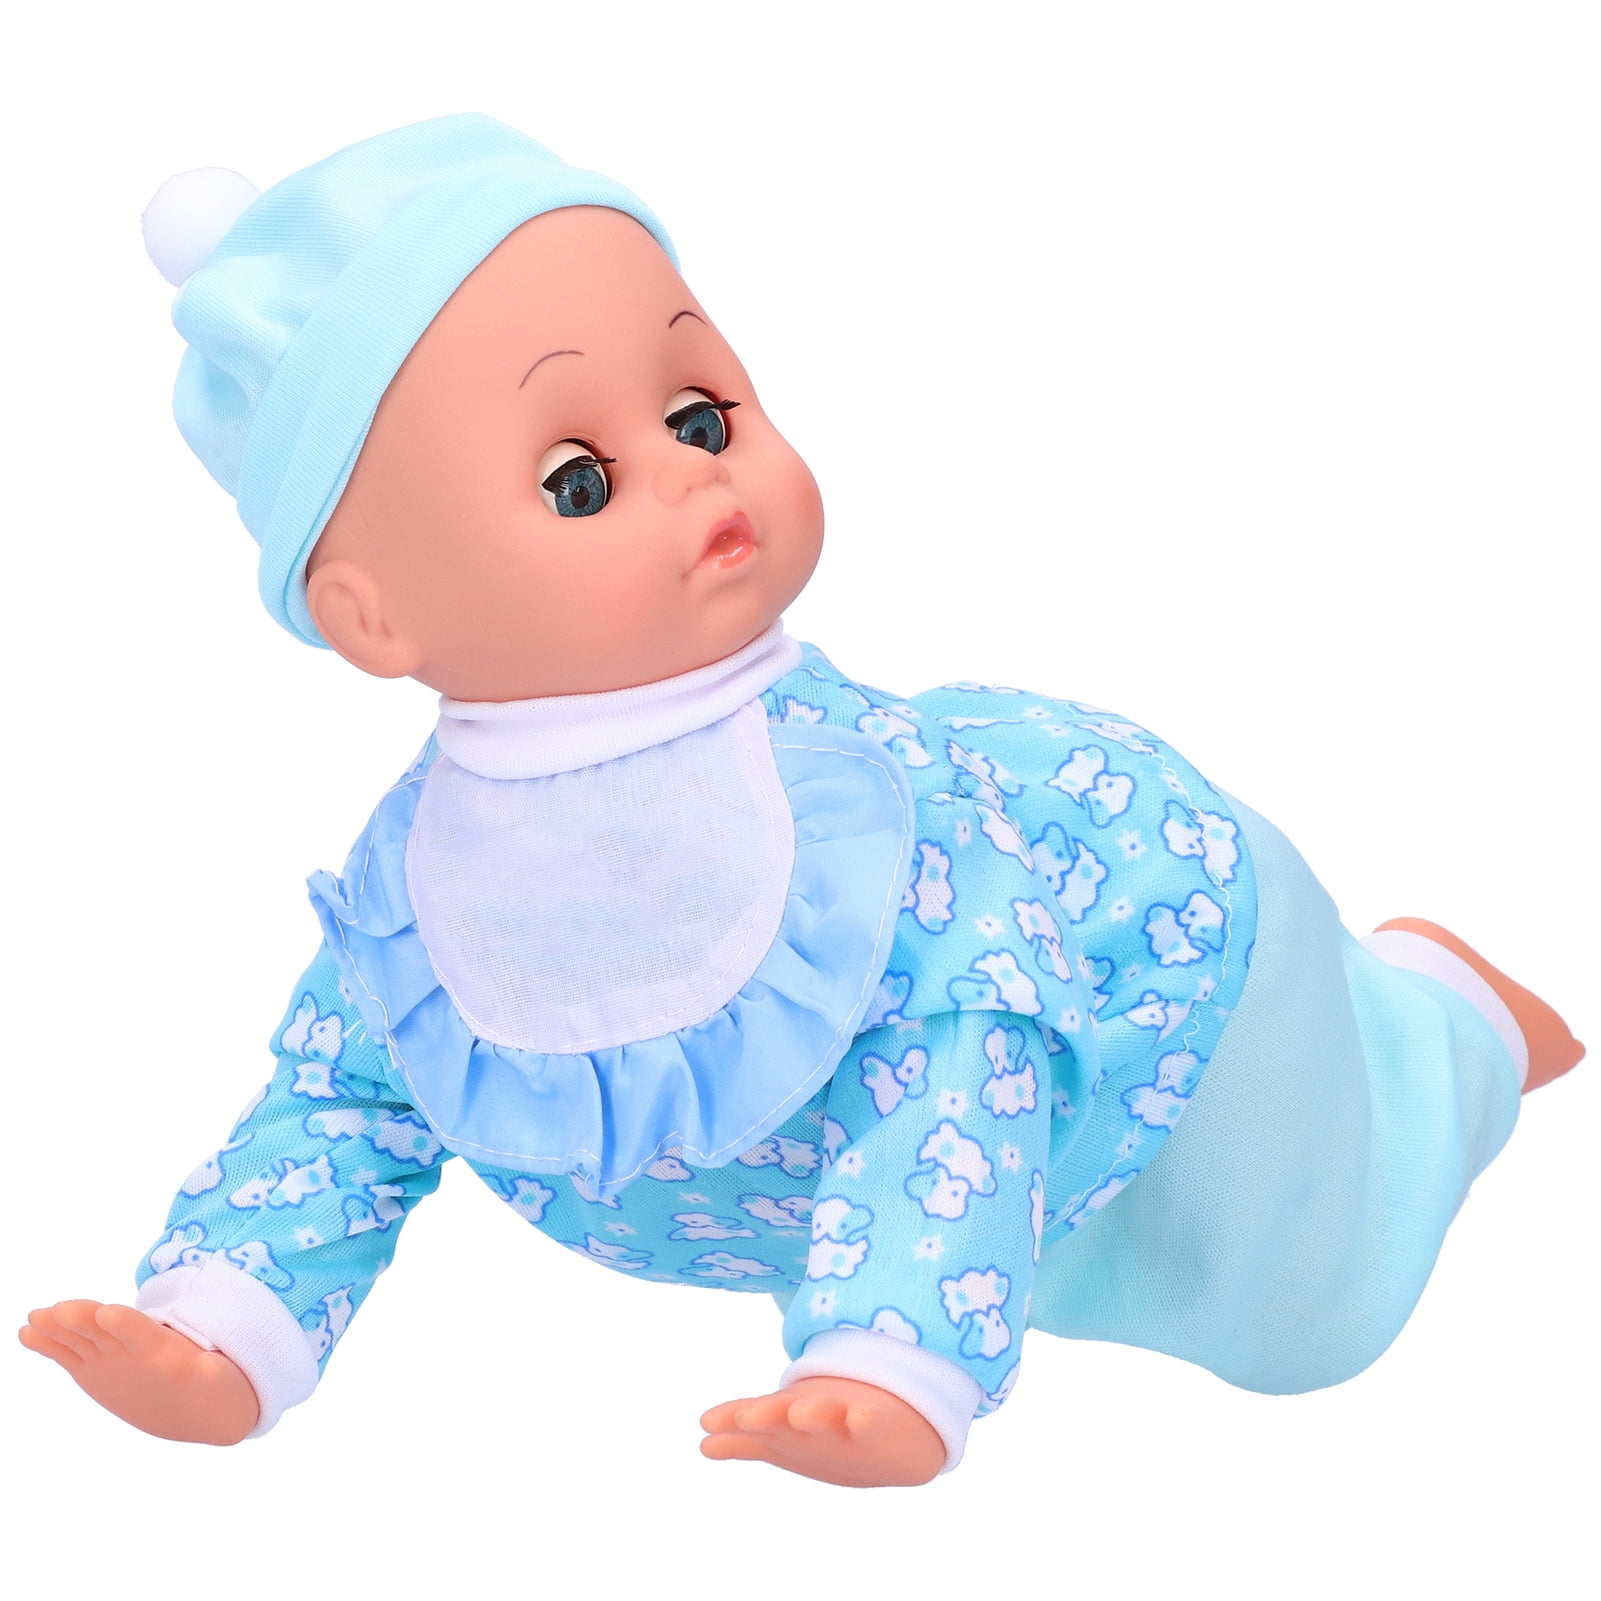 crawling baby doll 